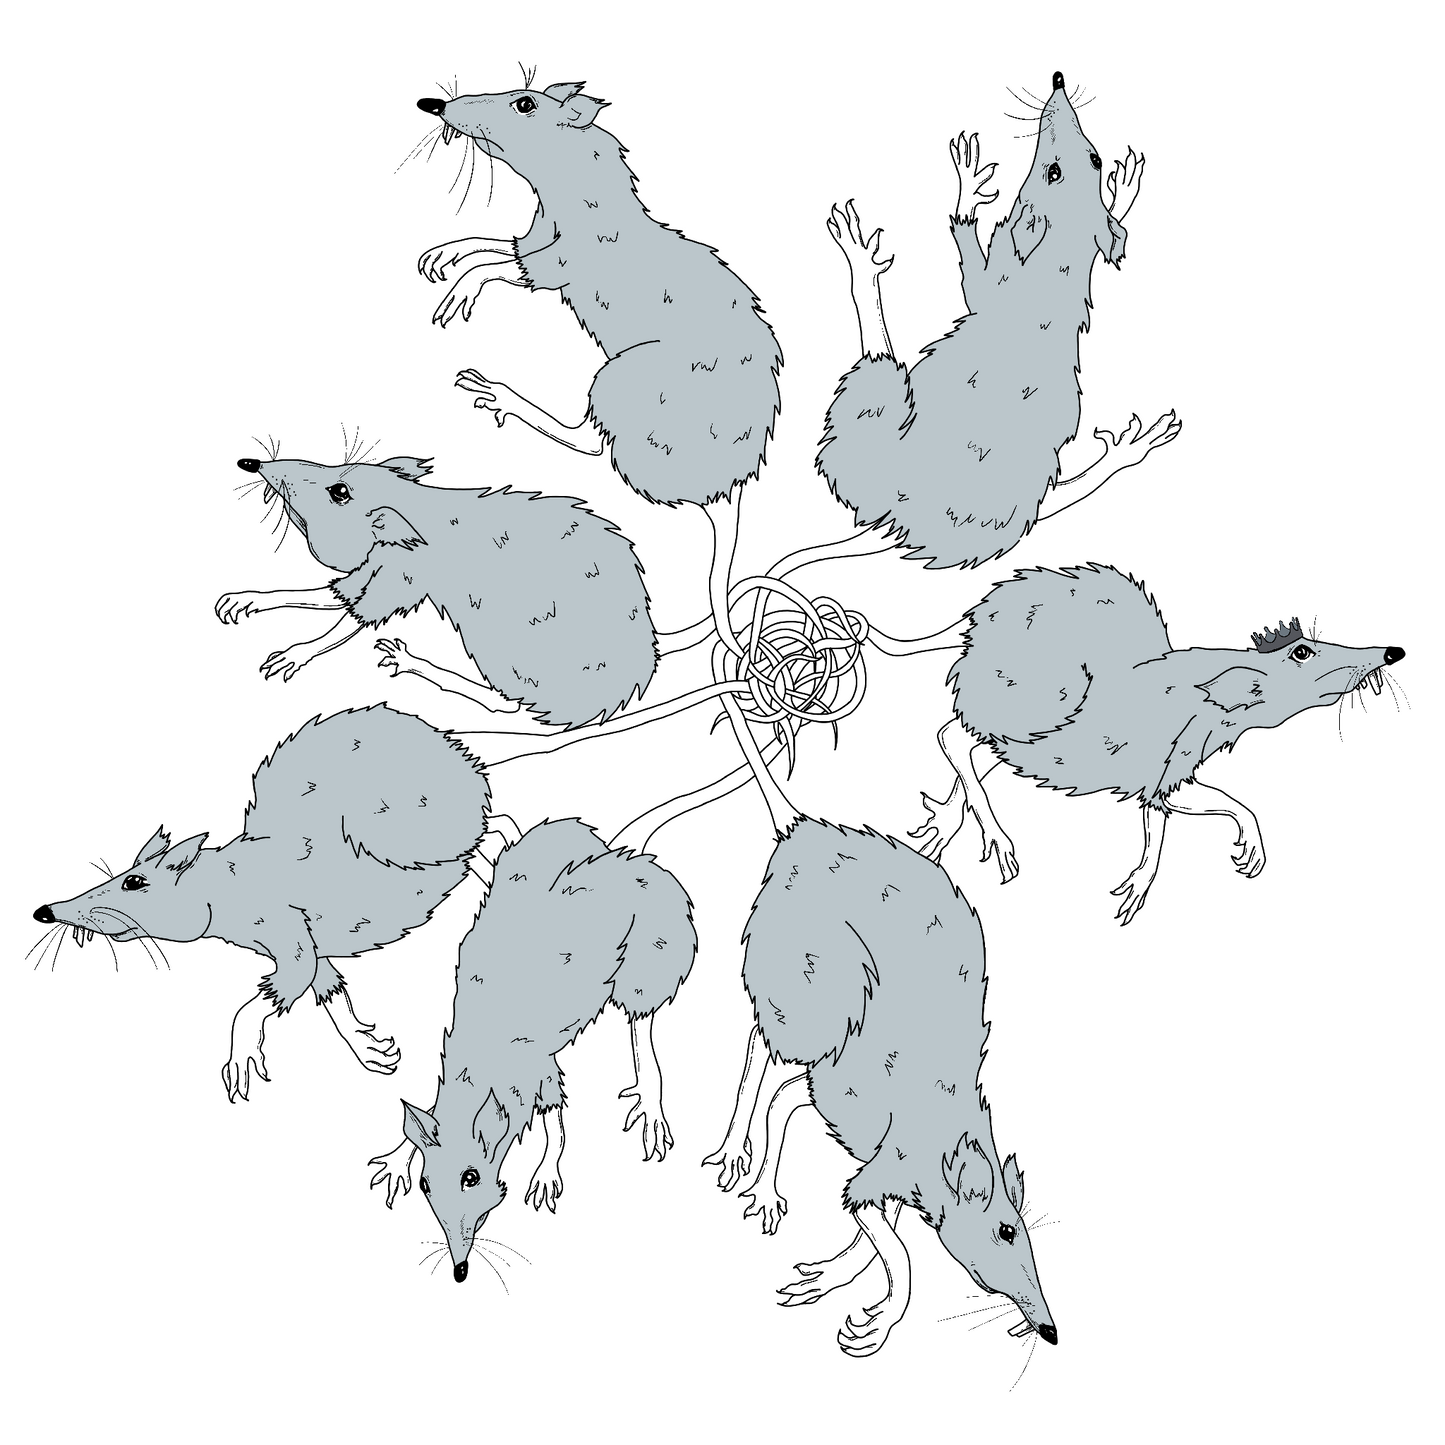 Rat King Fungi, an art print by Scoobtoobins - INPRNT